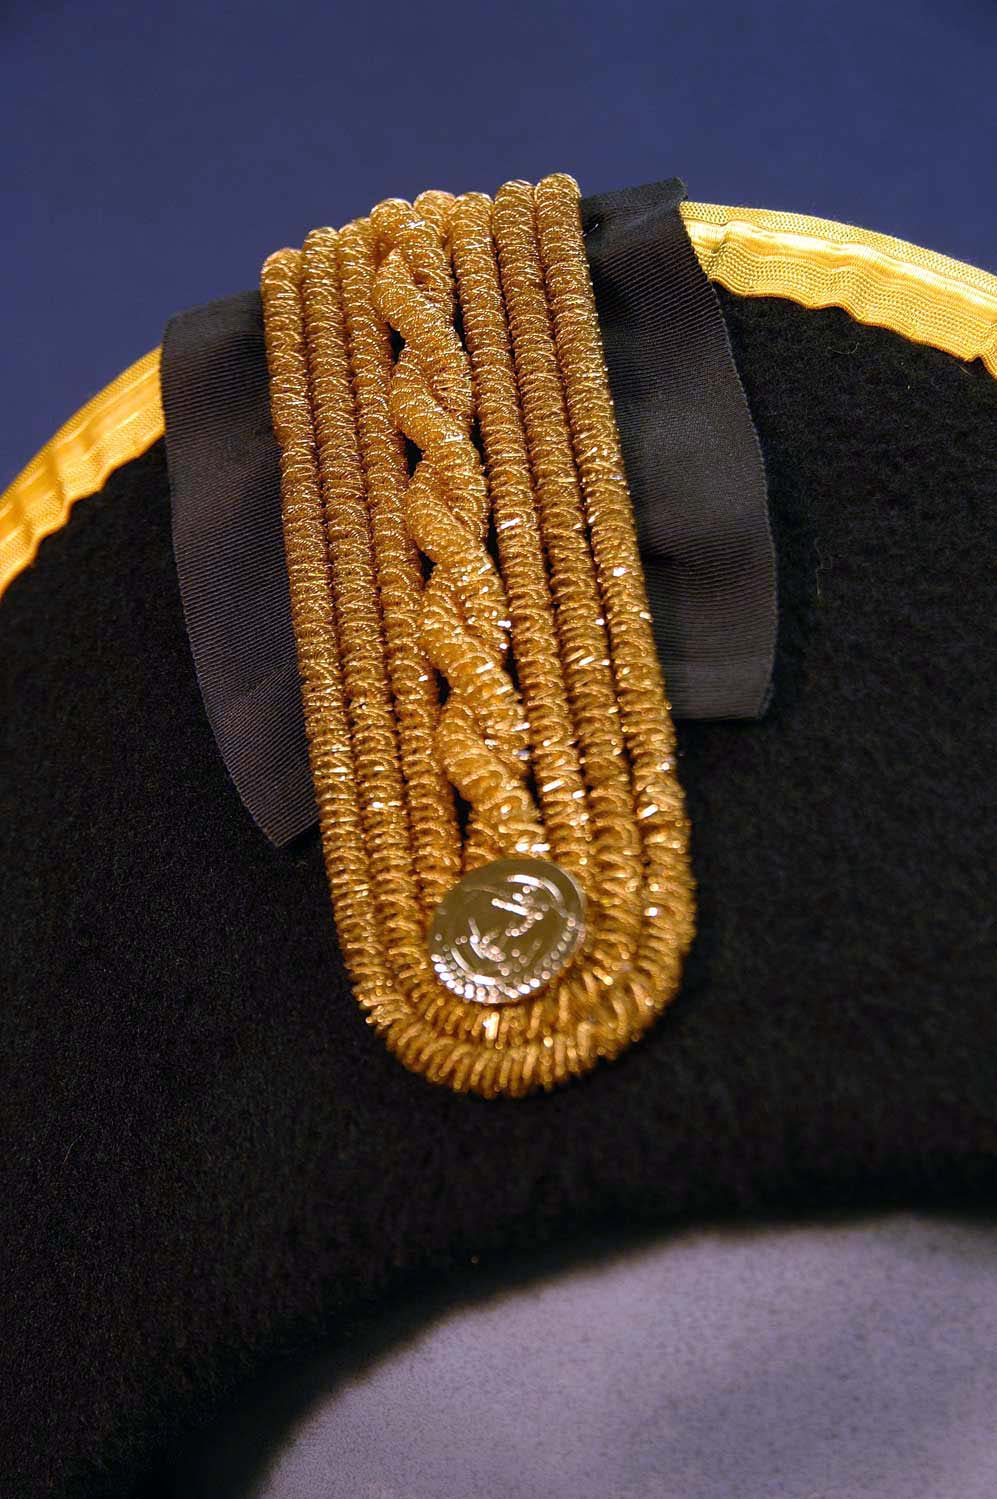 British, Vice-Admiral Cocked Hat